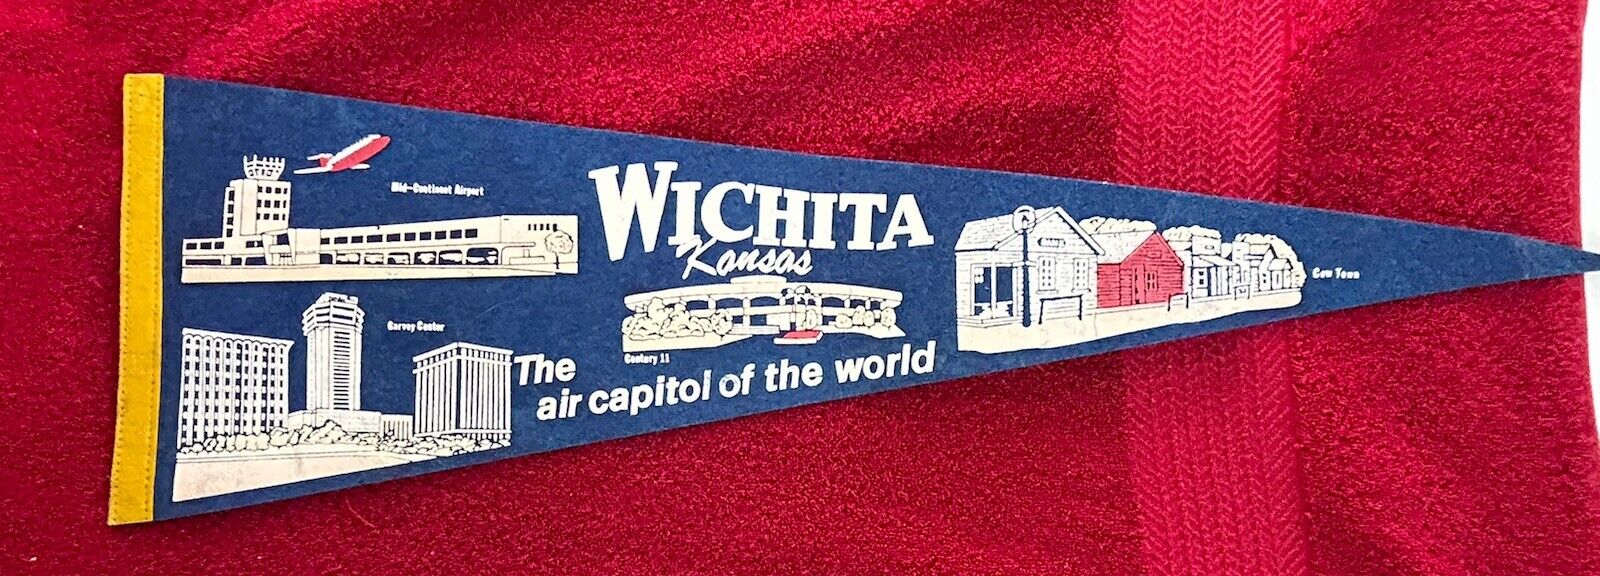 Vintage Felt Pennant Wichita Kansas Air Capitol Of The World Garvey Cow Town